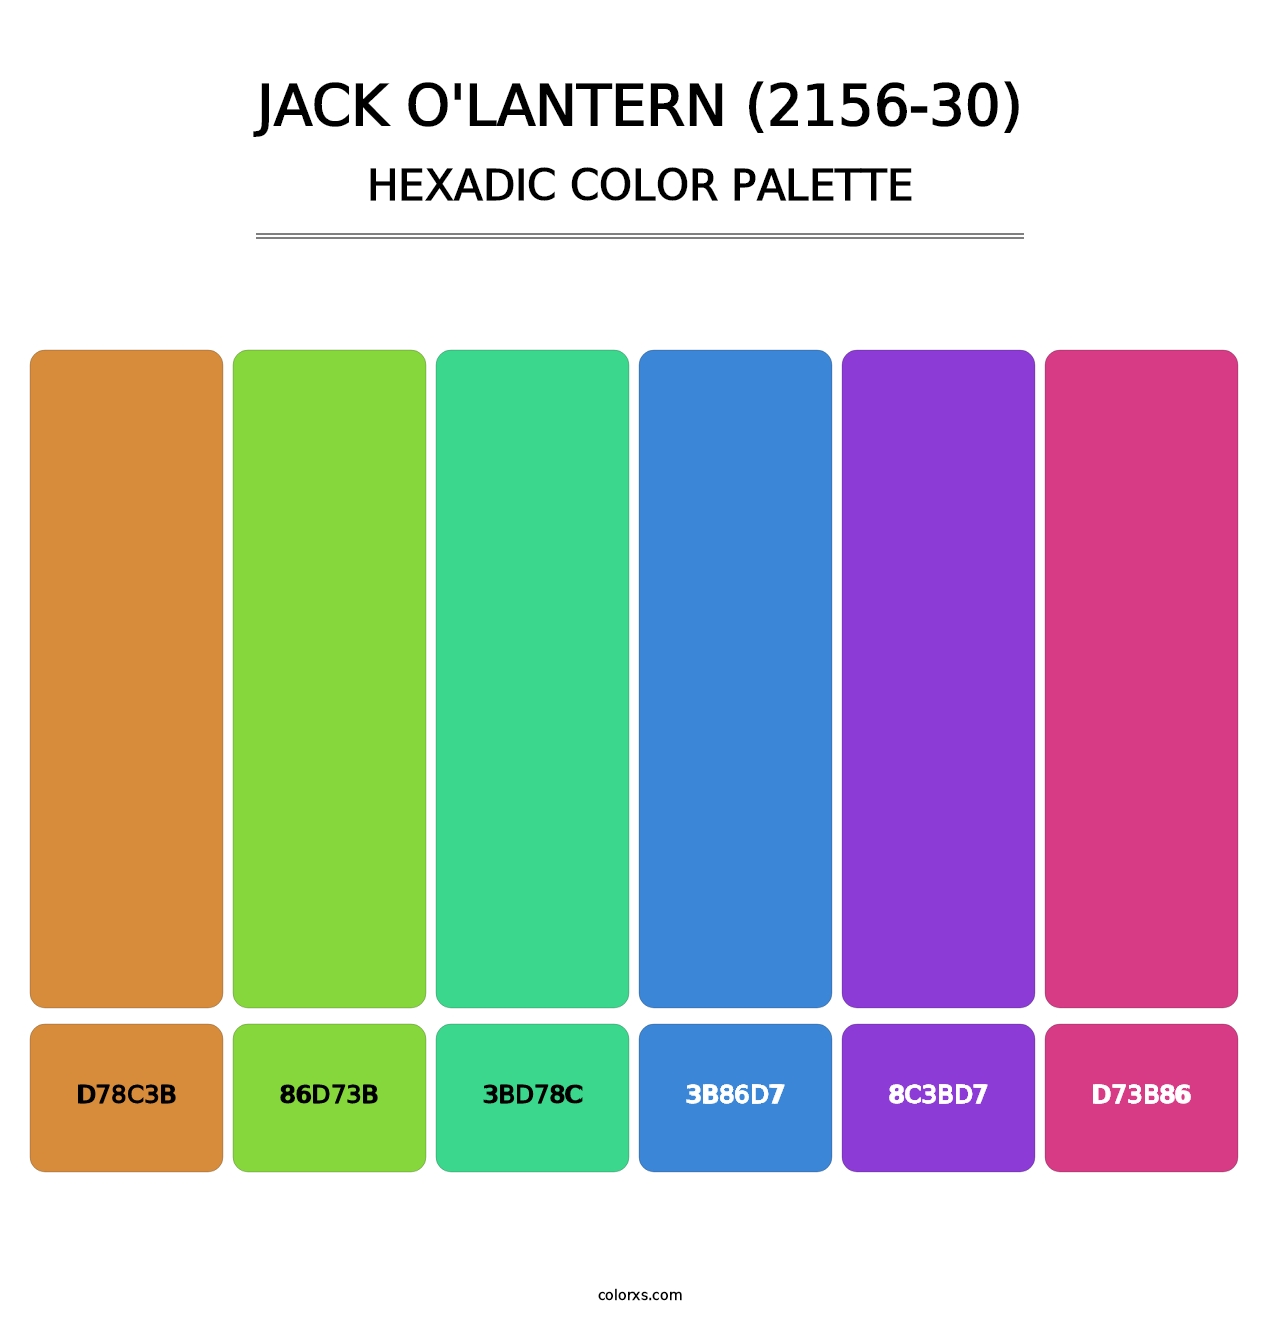 Jack O'Lantern (2156-30) - Hexadic Color Palette